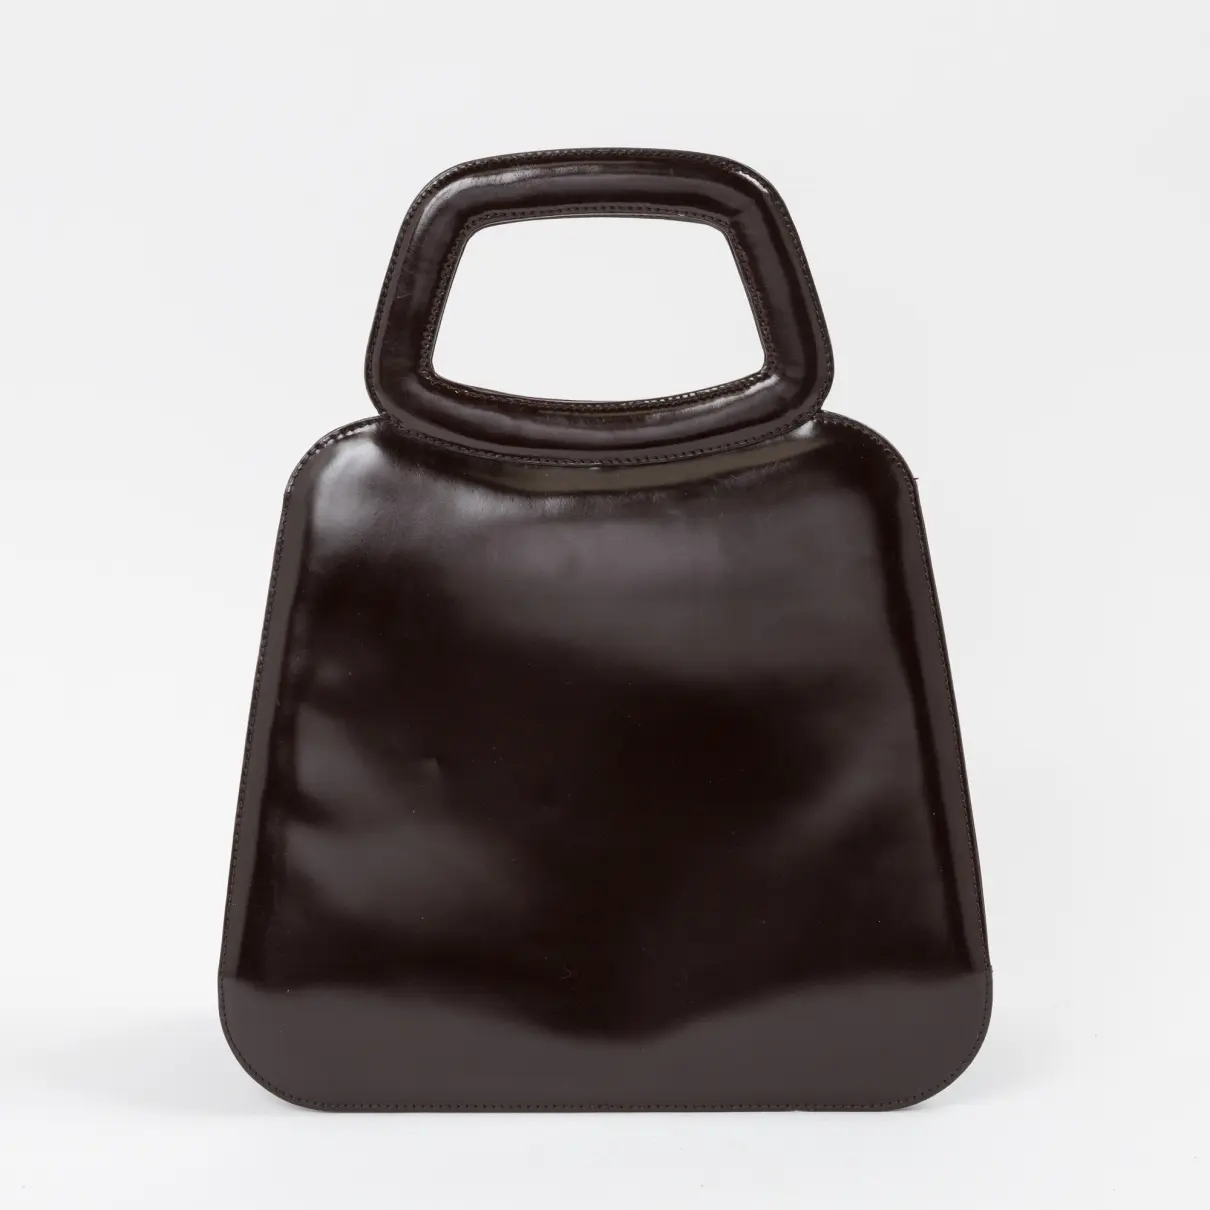 Buy Giorgio Armani Patent leather handbag online - Vintage